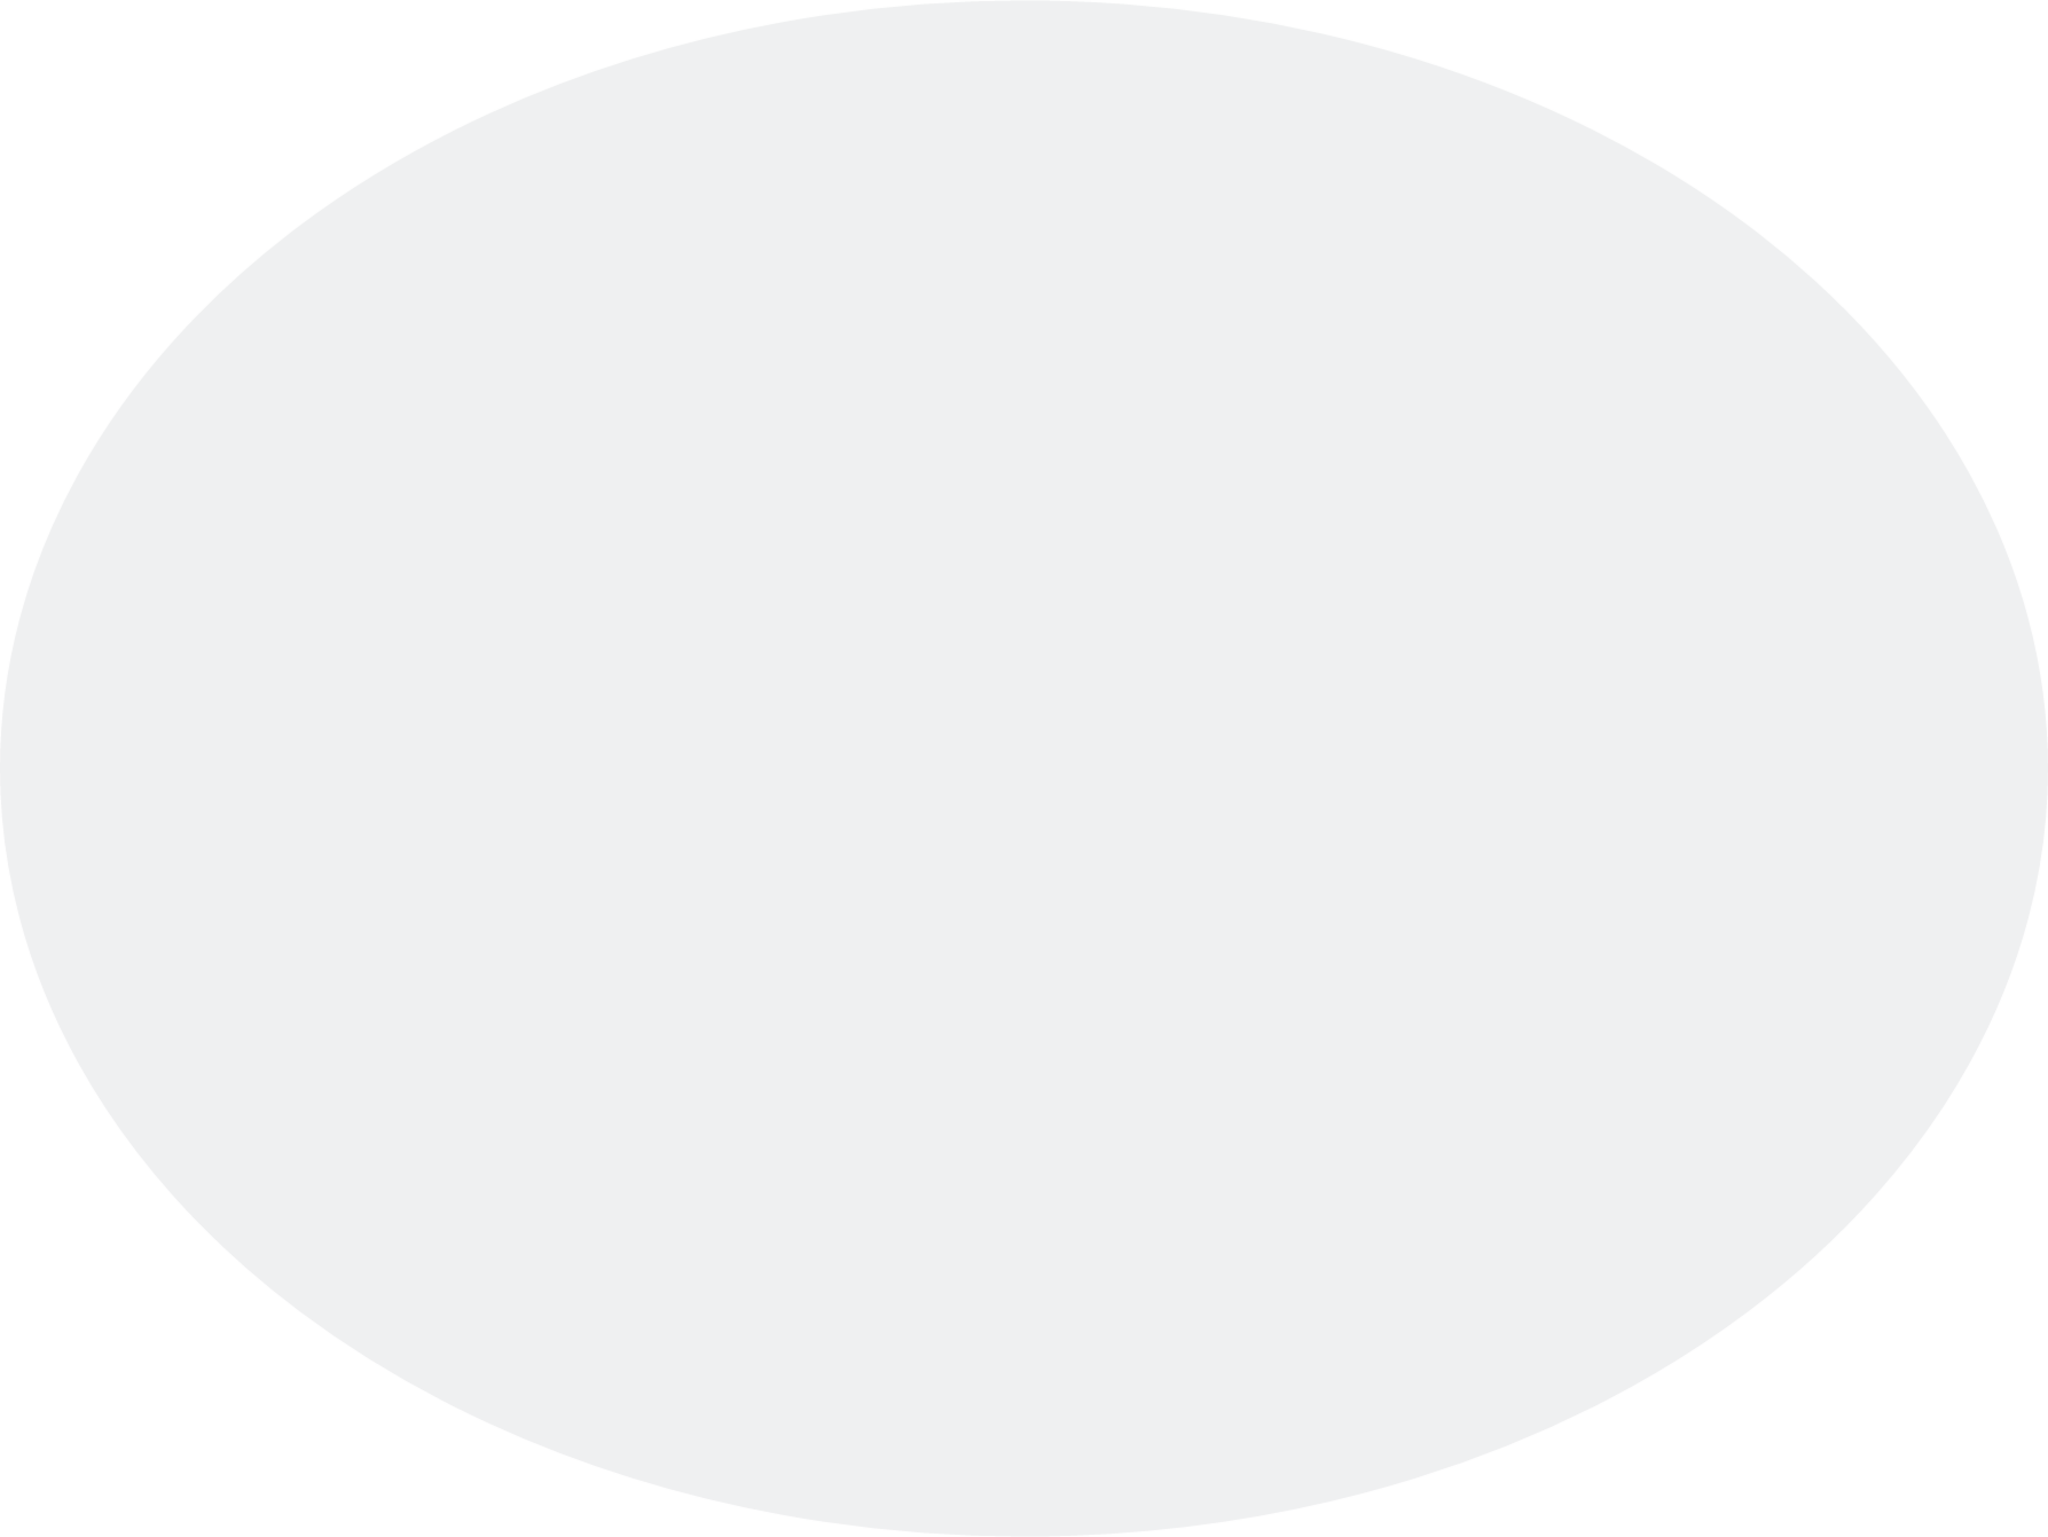 gnumeric object ellipse icon